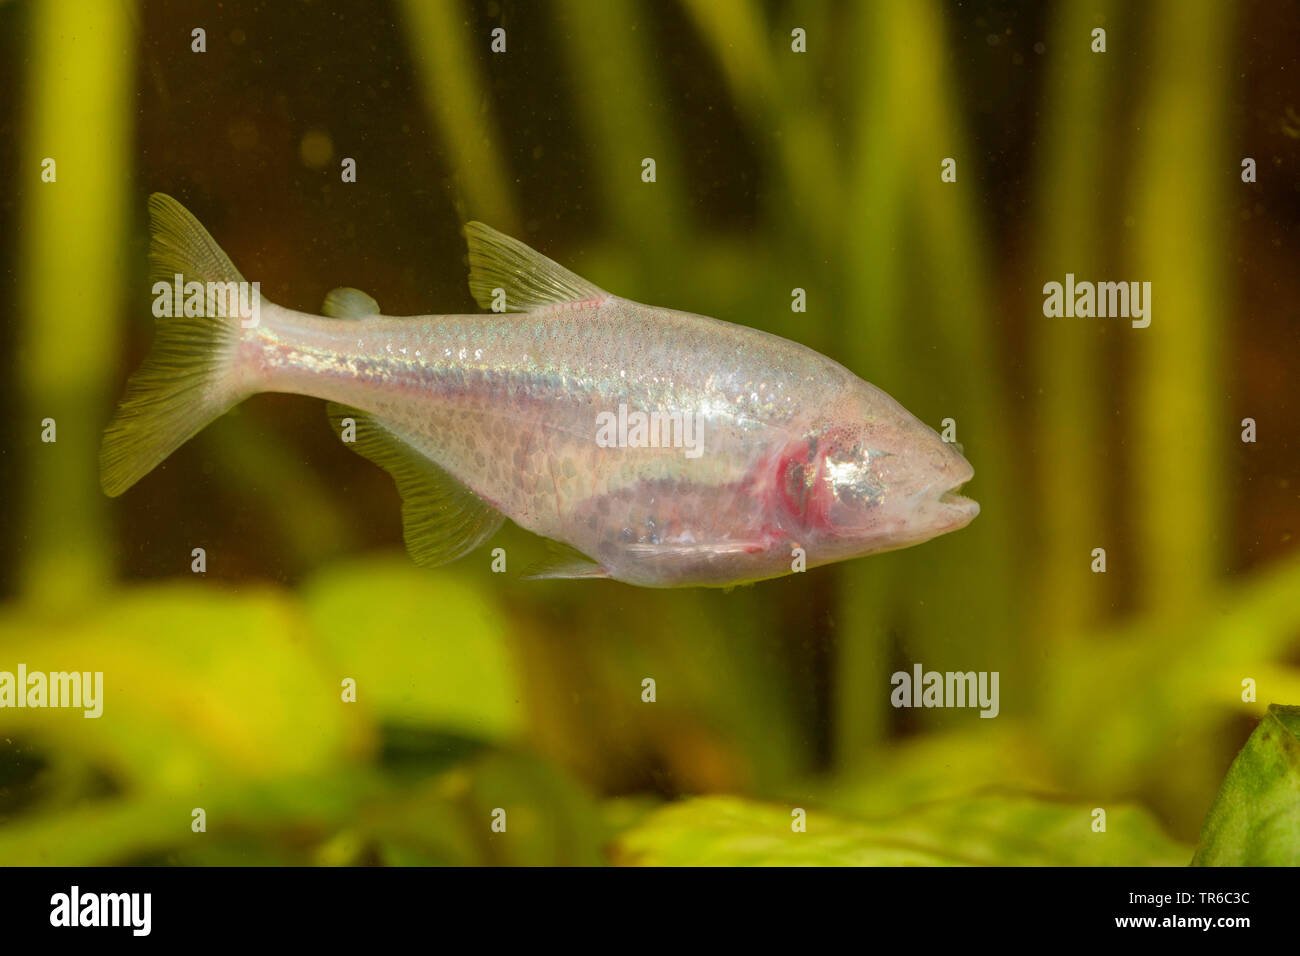 Cueva ciega, ciega cavefish tetra (Anoptichthys jordani, Astyanax fasciatus mexicanus), retrato de longitud completa, vista lateral Foto de stock